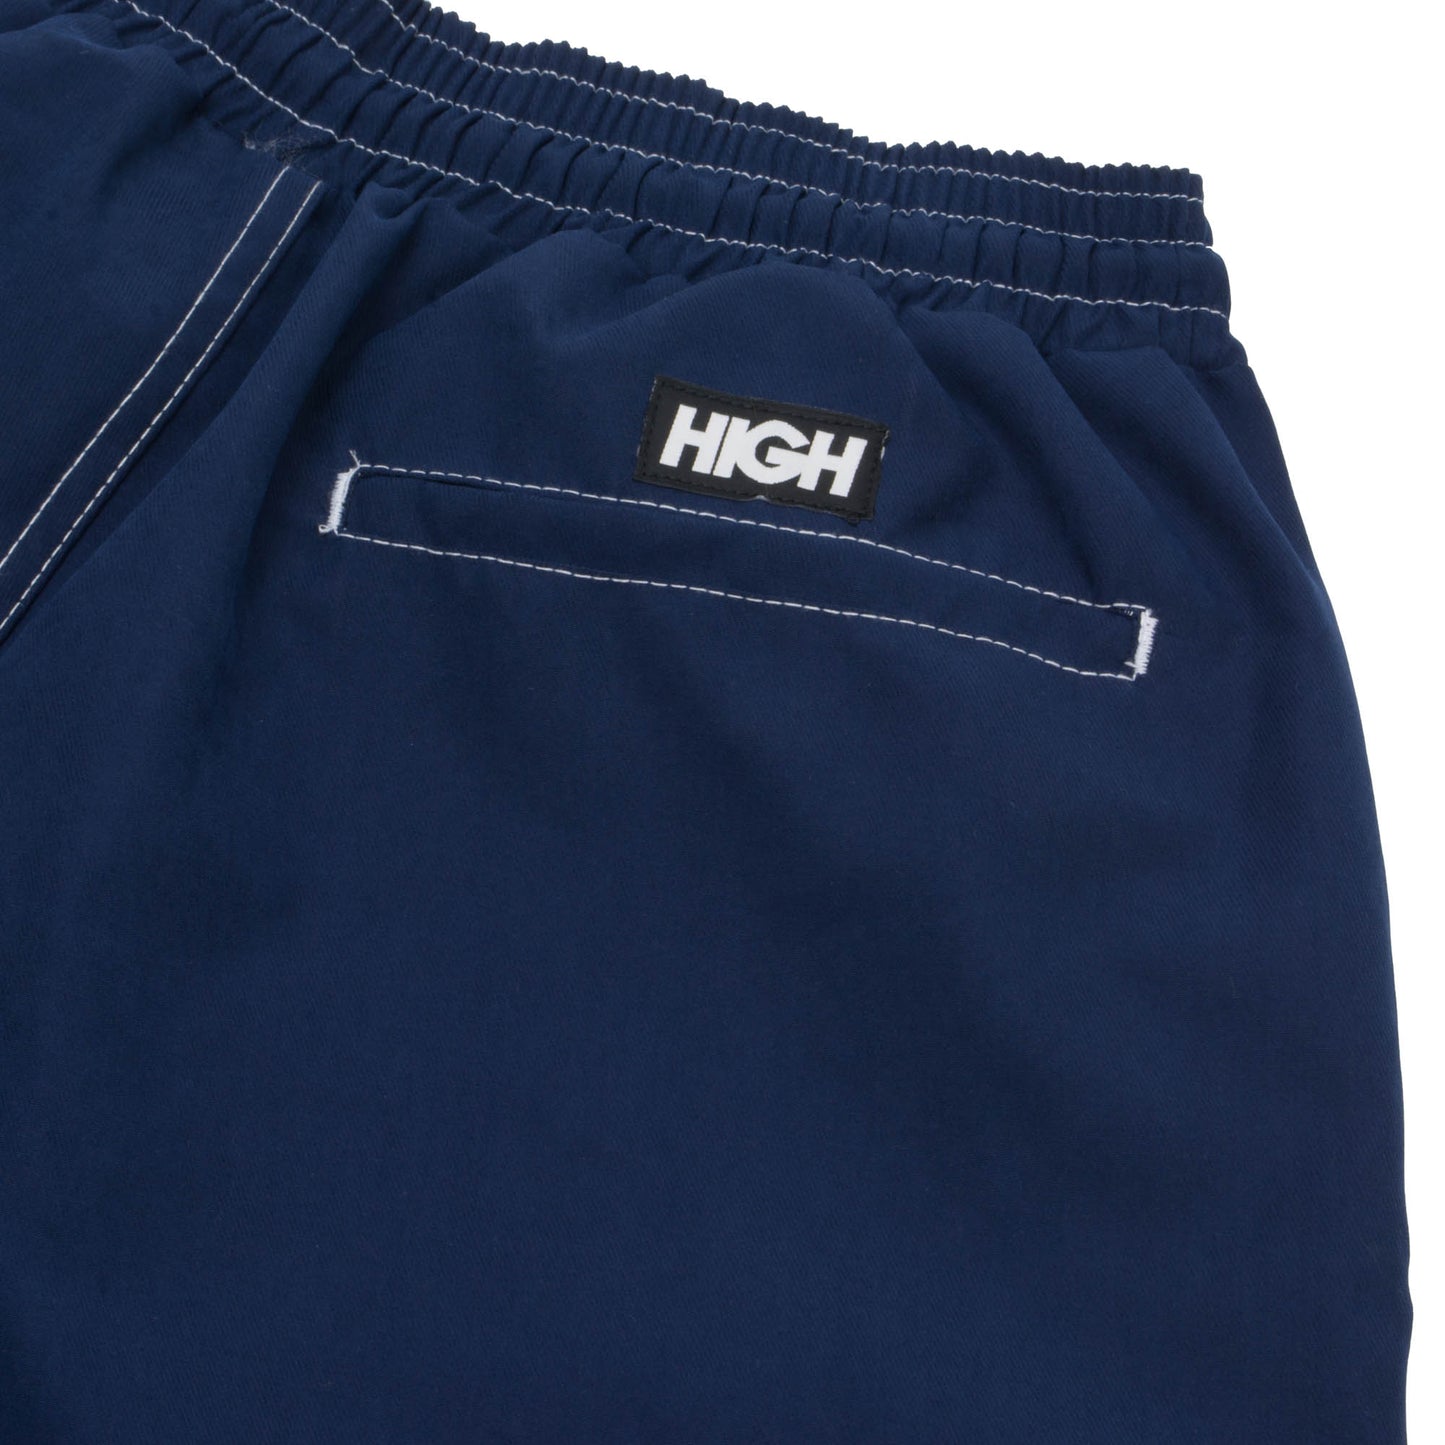 High Company Shorts Colored Navy